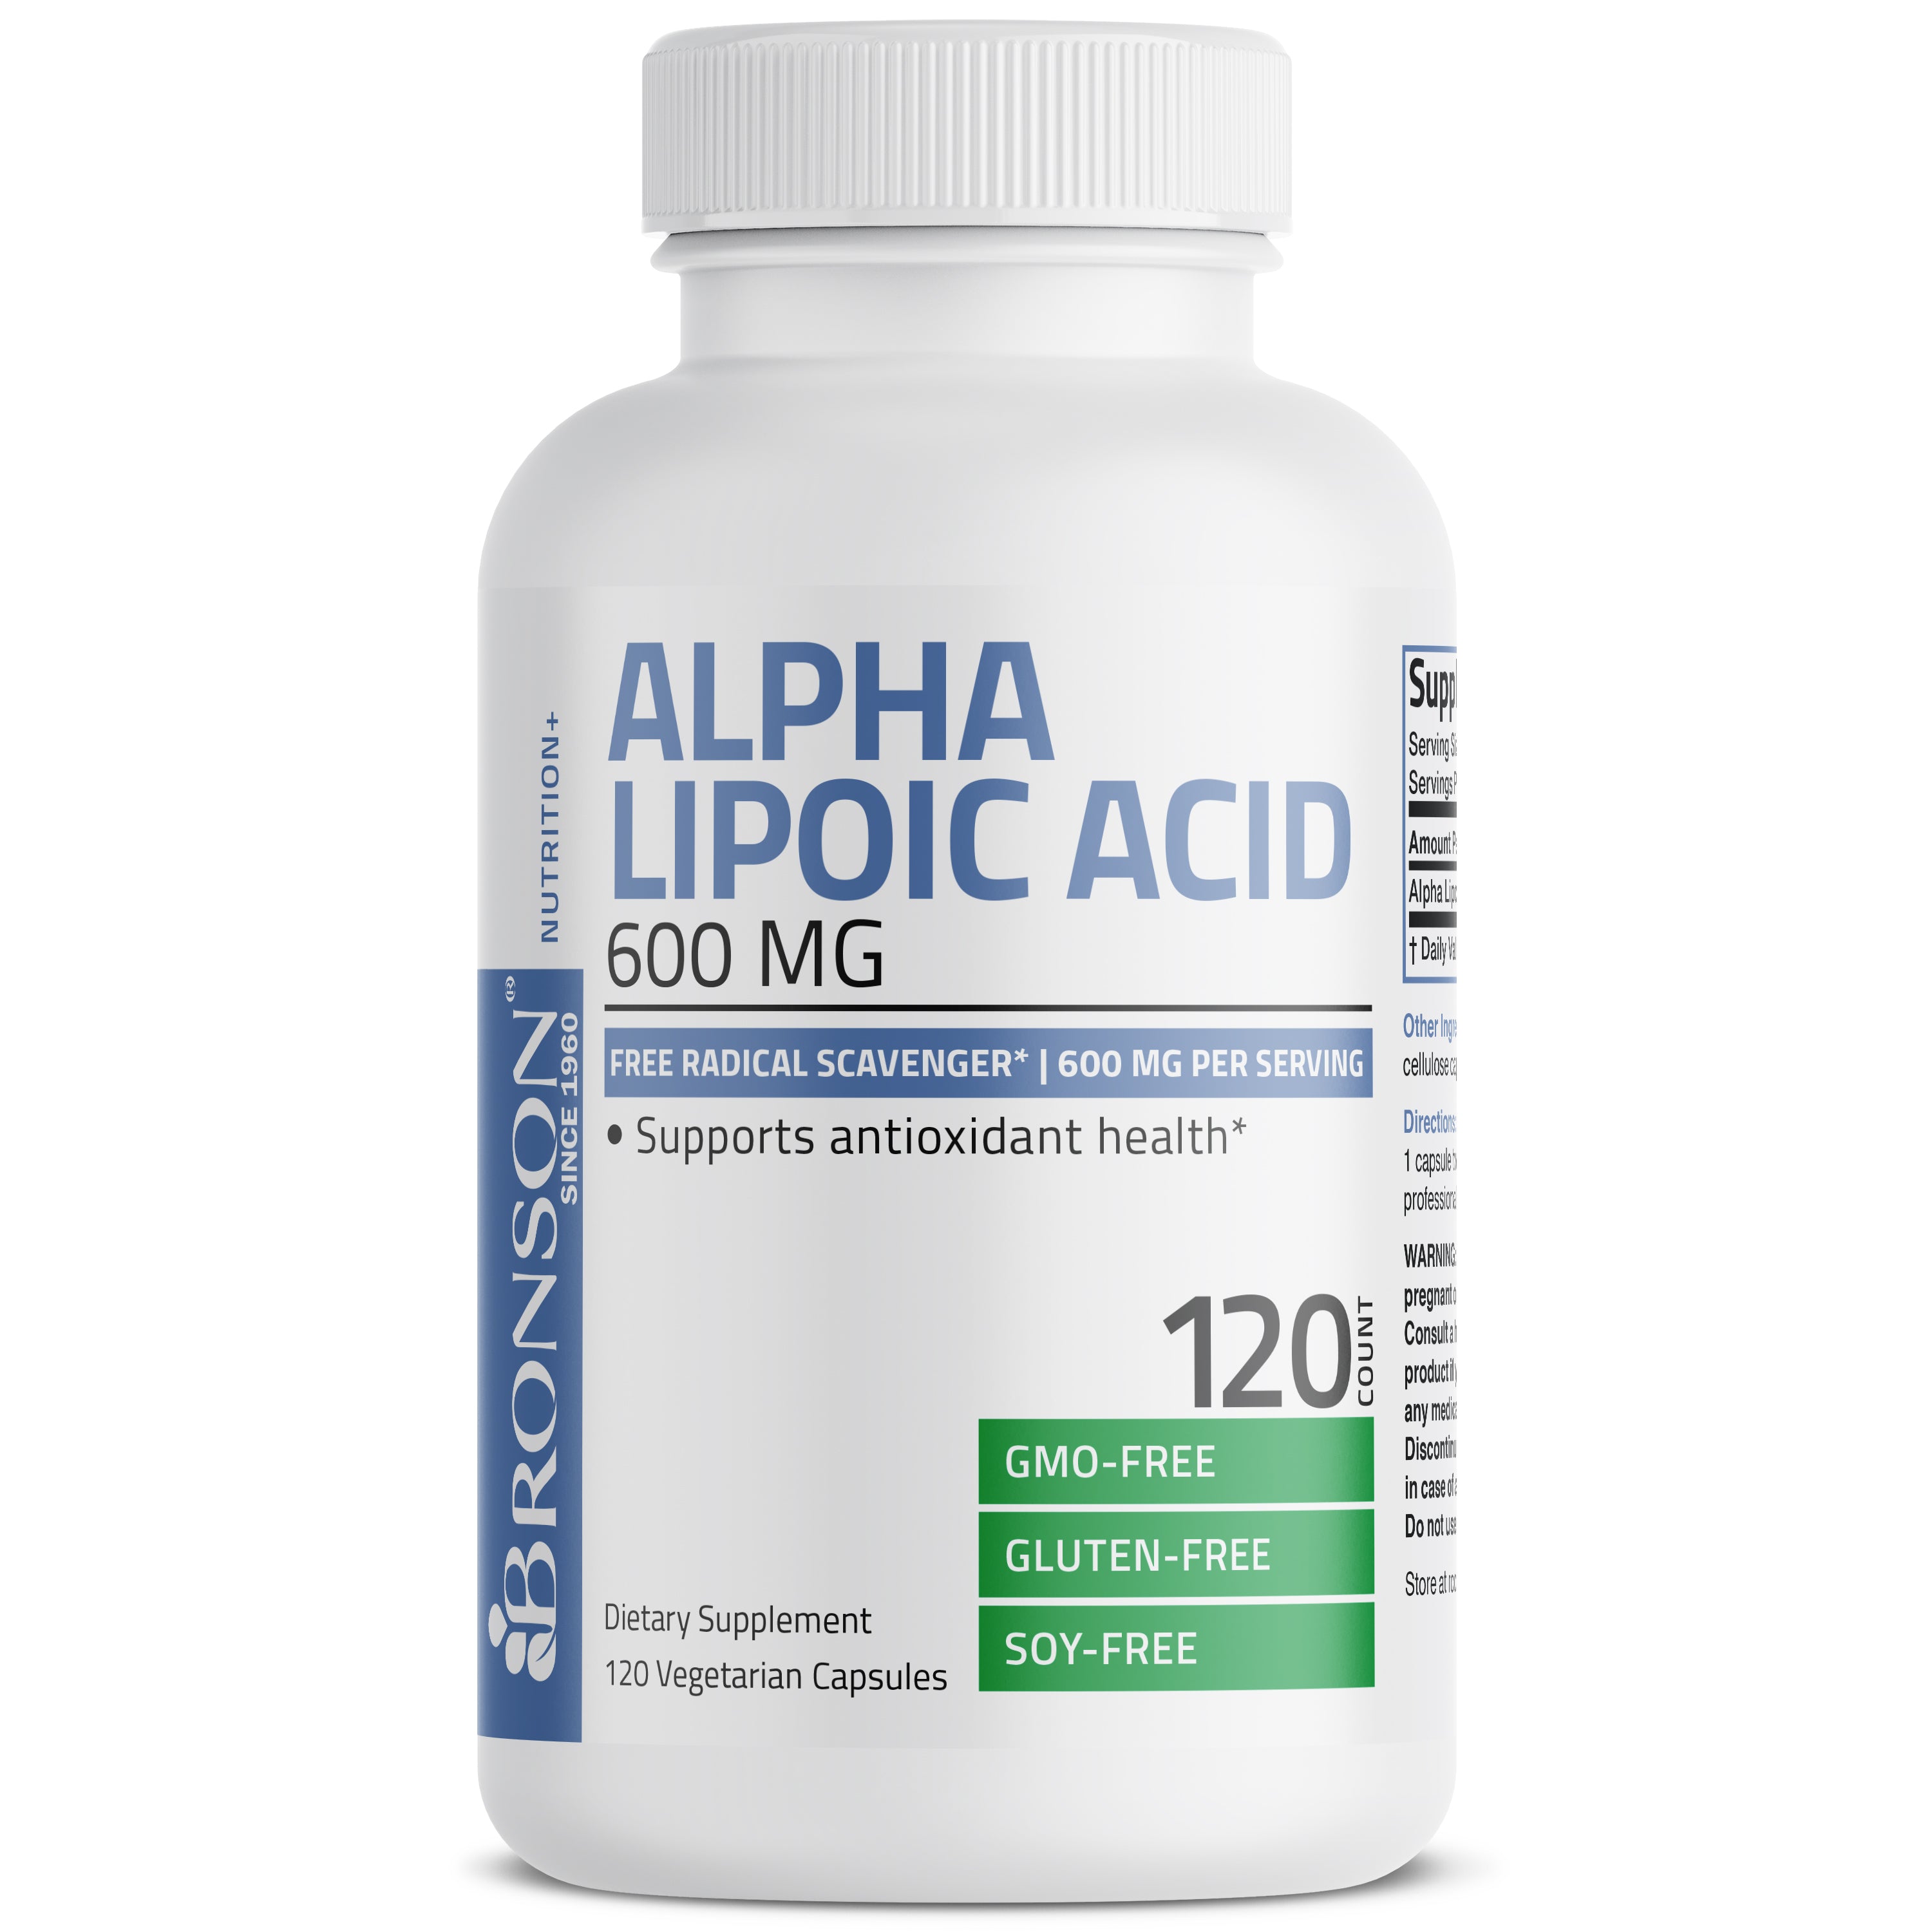 Alpha Lipoic Acid 600 MG view 5 of 7